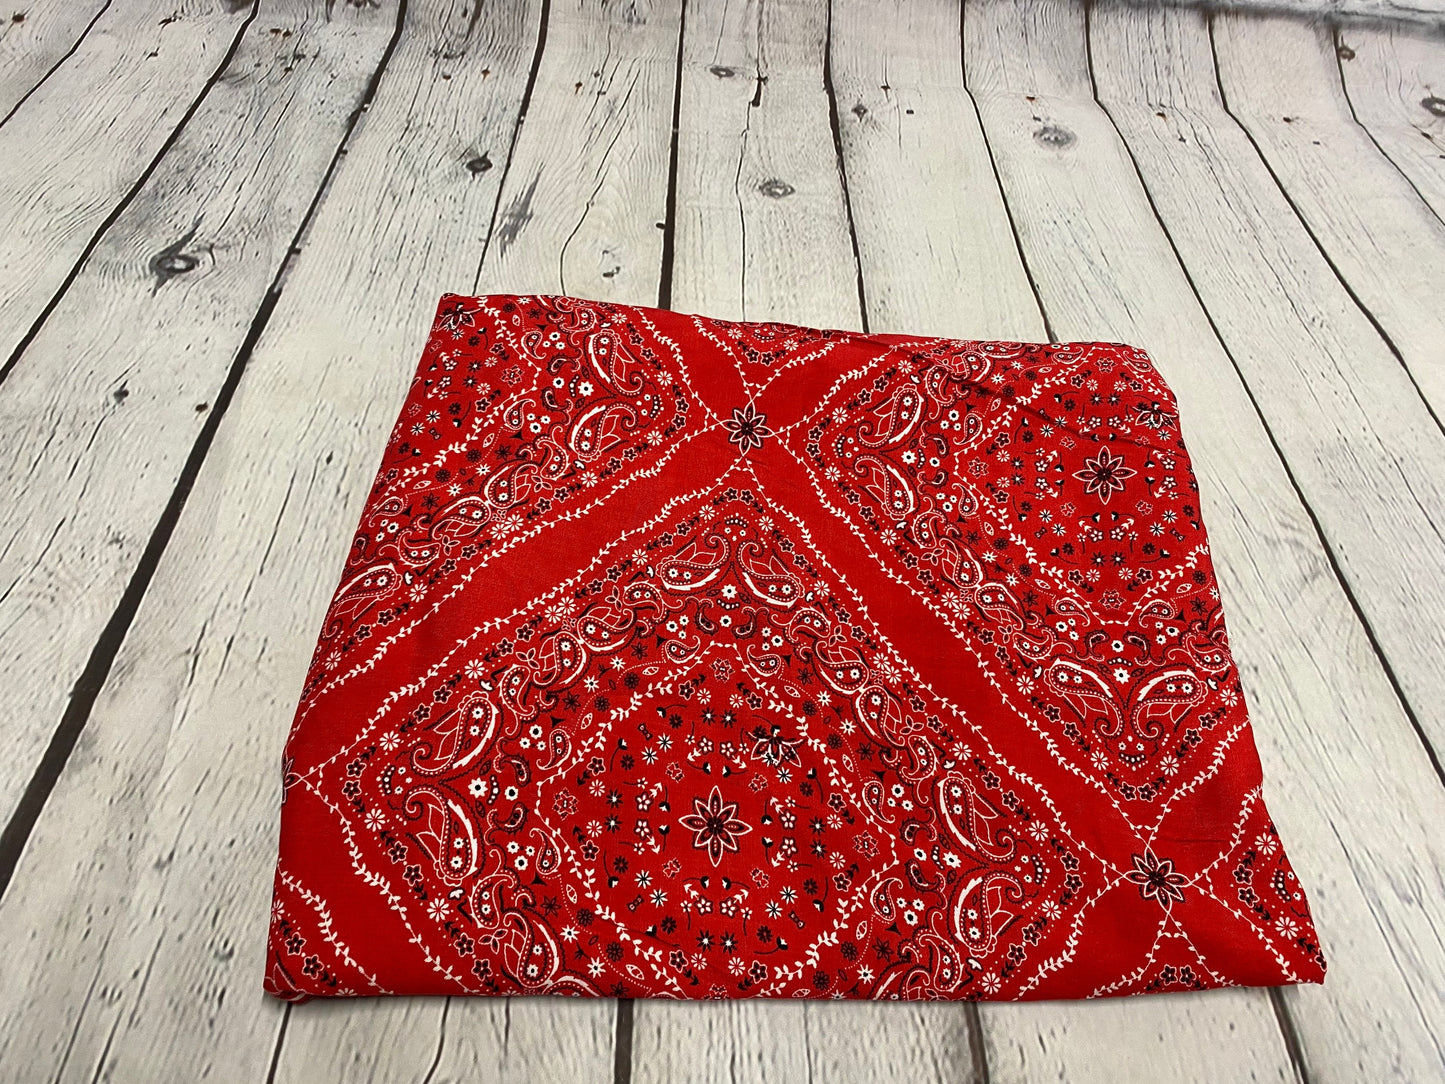 Rayon Challis Woven Print Fabric By The Yard Red Paisley Bandanna